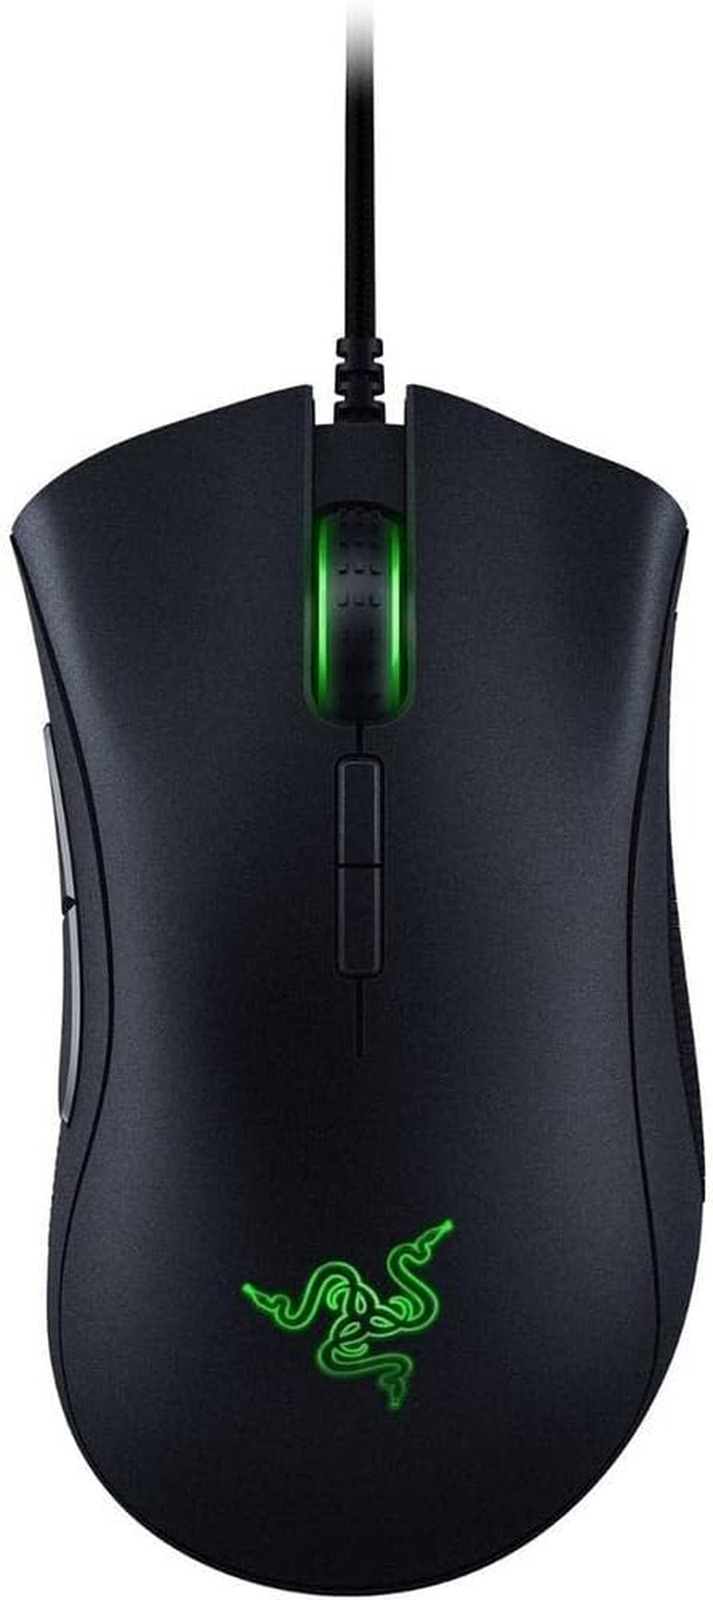 Deathadder Elite Gaming Mouse: 16,000 DPI Optical Sensor - Chroma RGB Lighting -